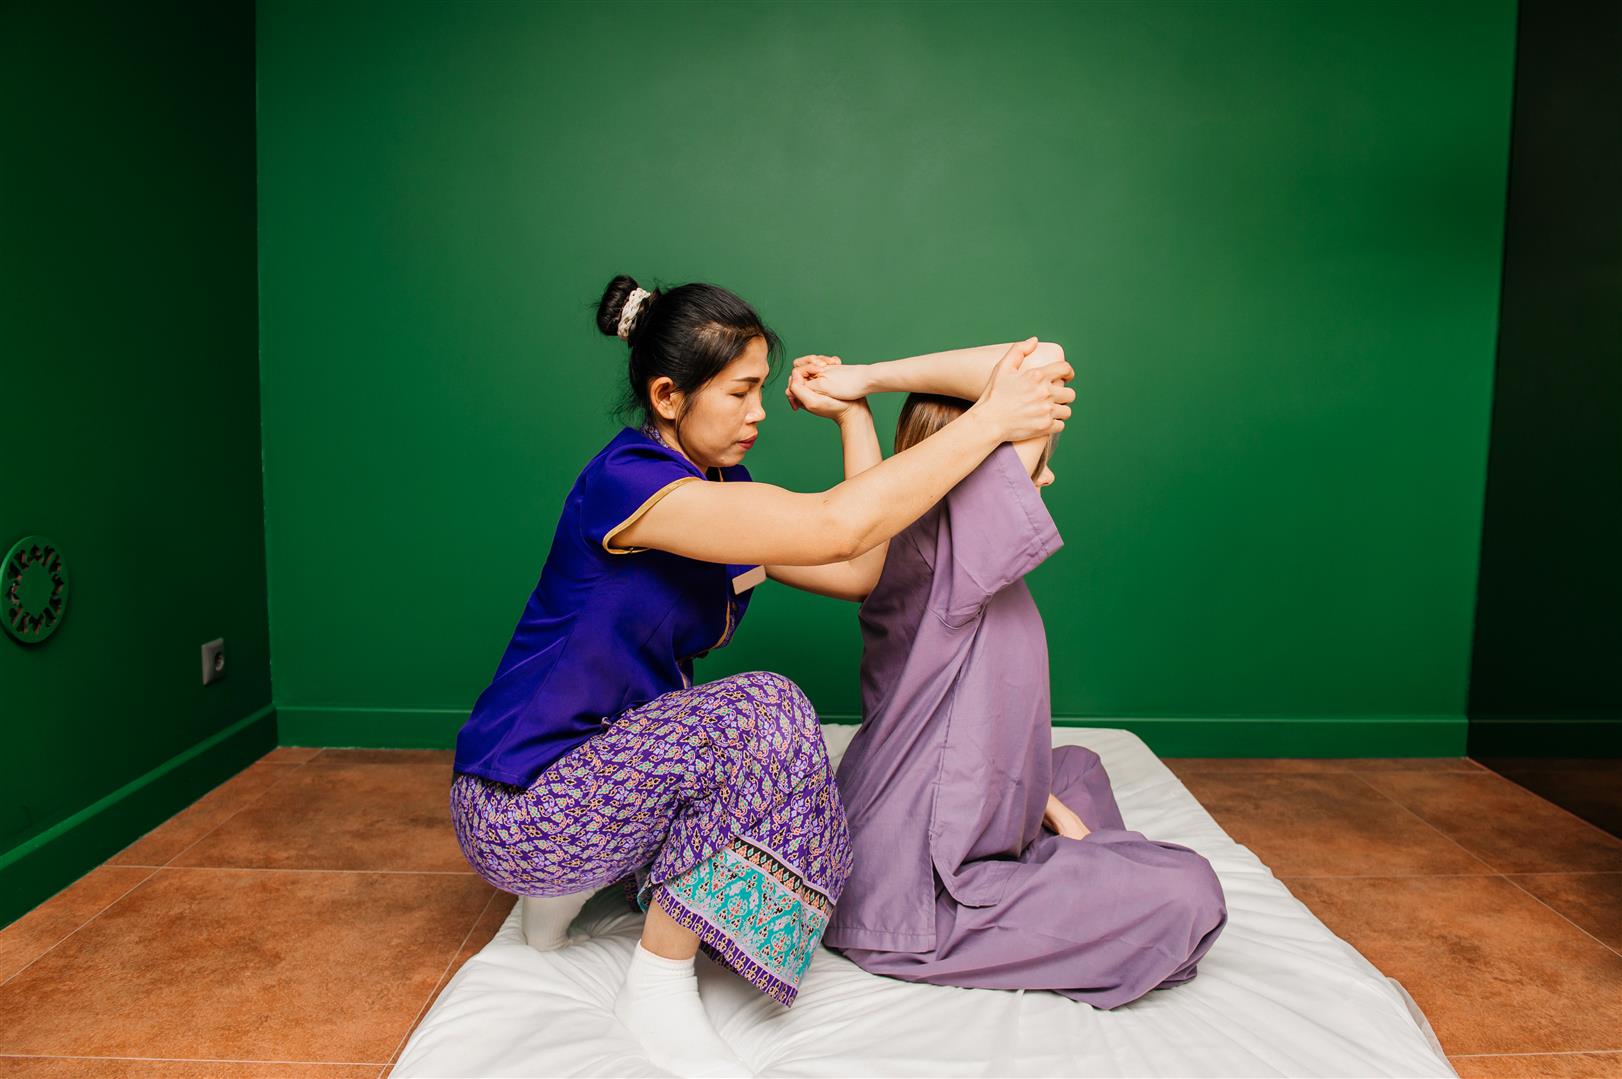 thai-masseur-worker-ethnic-asian-clothes-makes-traditional-spa-procedures-white-beautiful-lady-purple-pyjamas-green-yoga-room.jpg